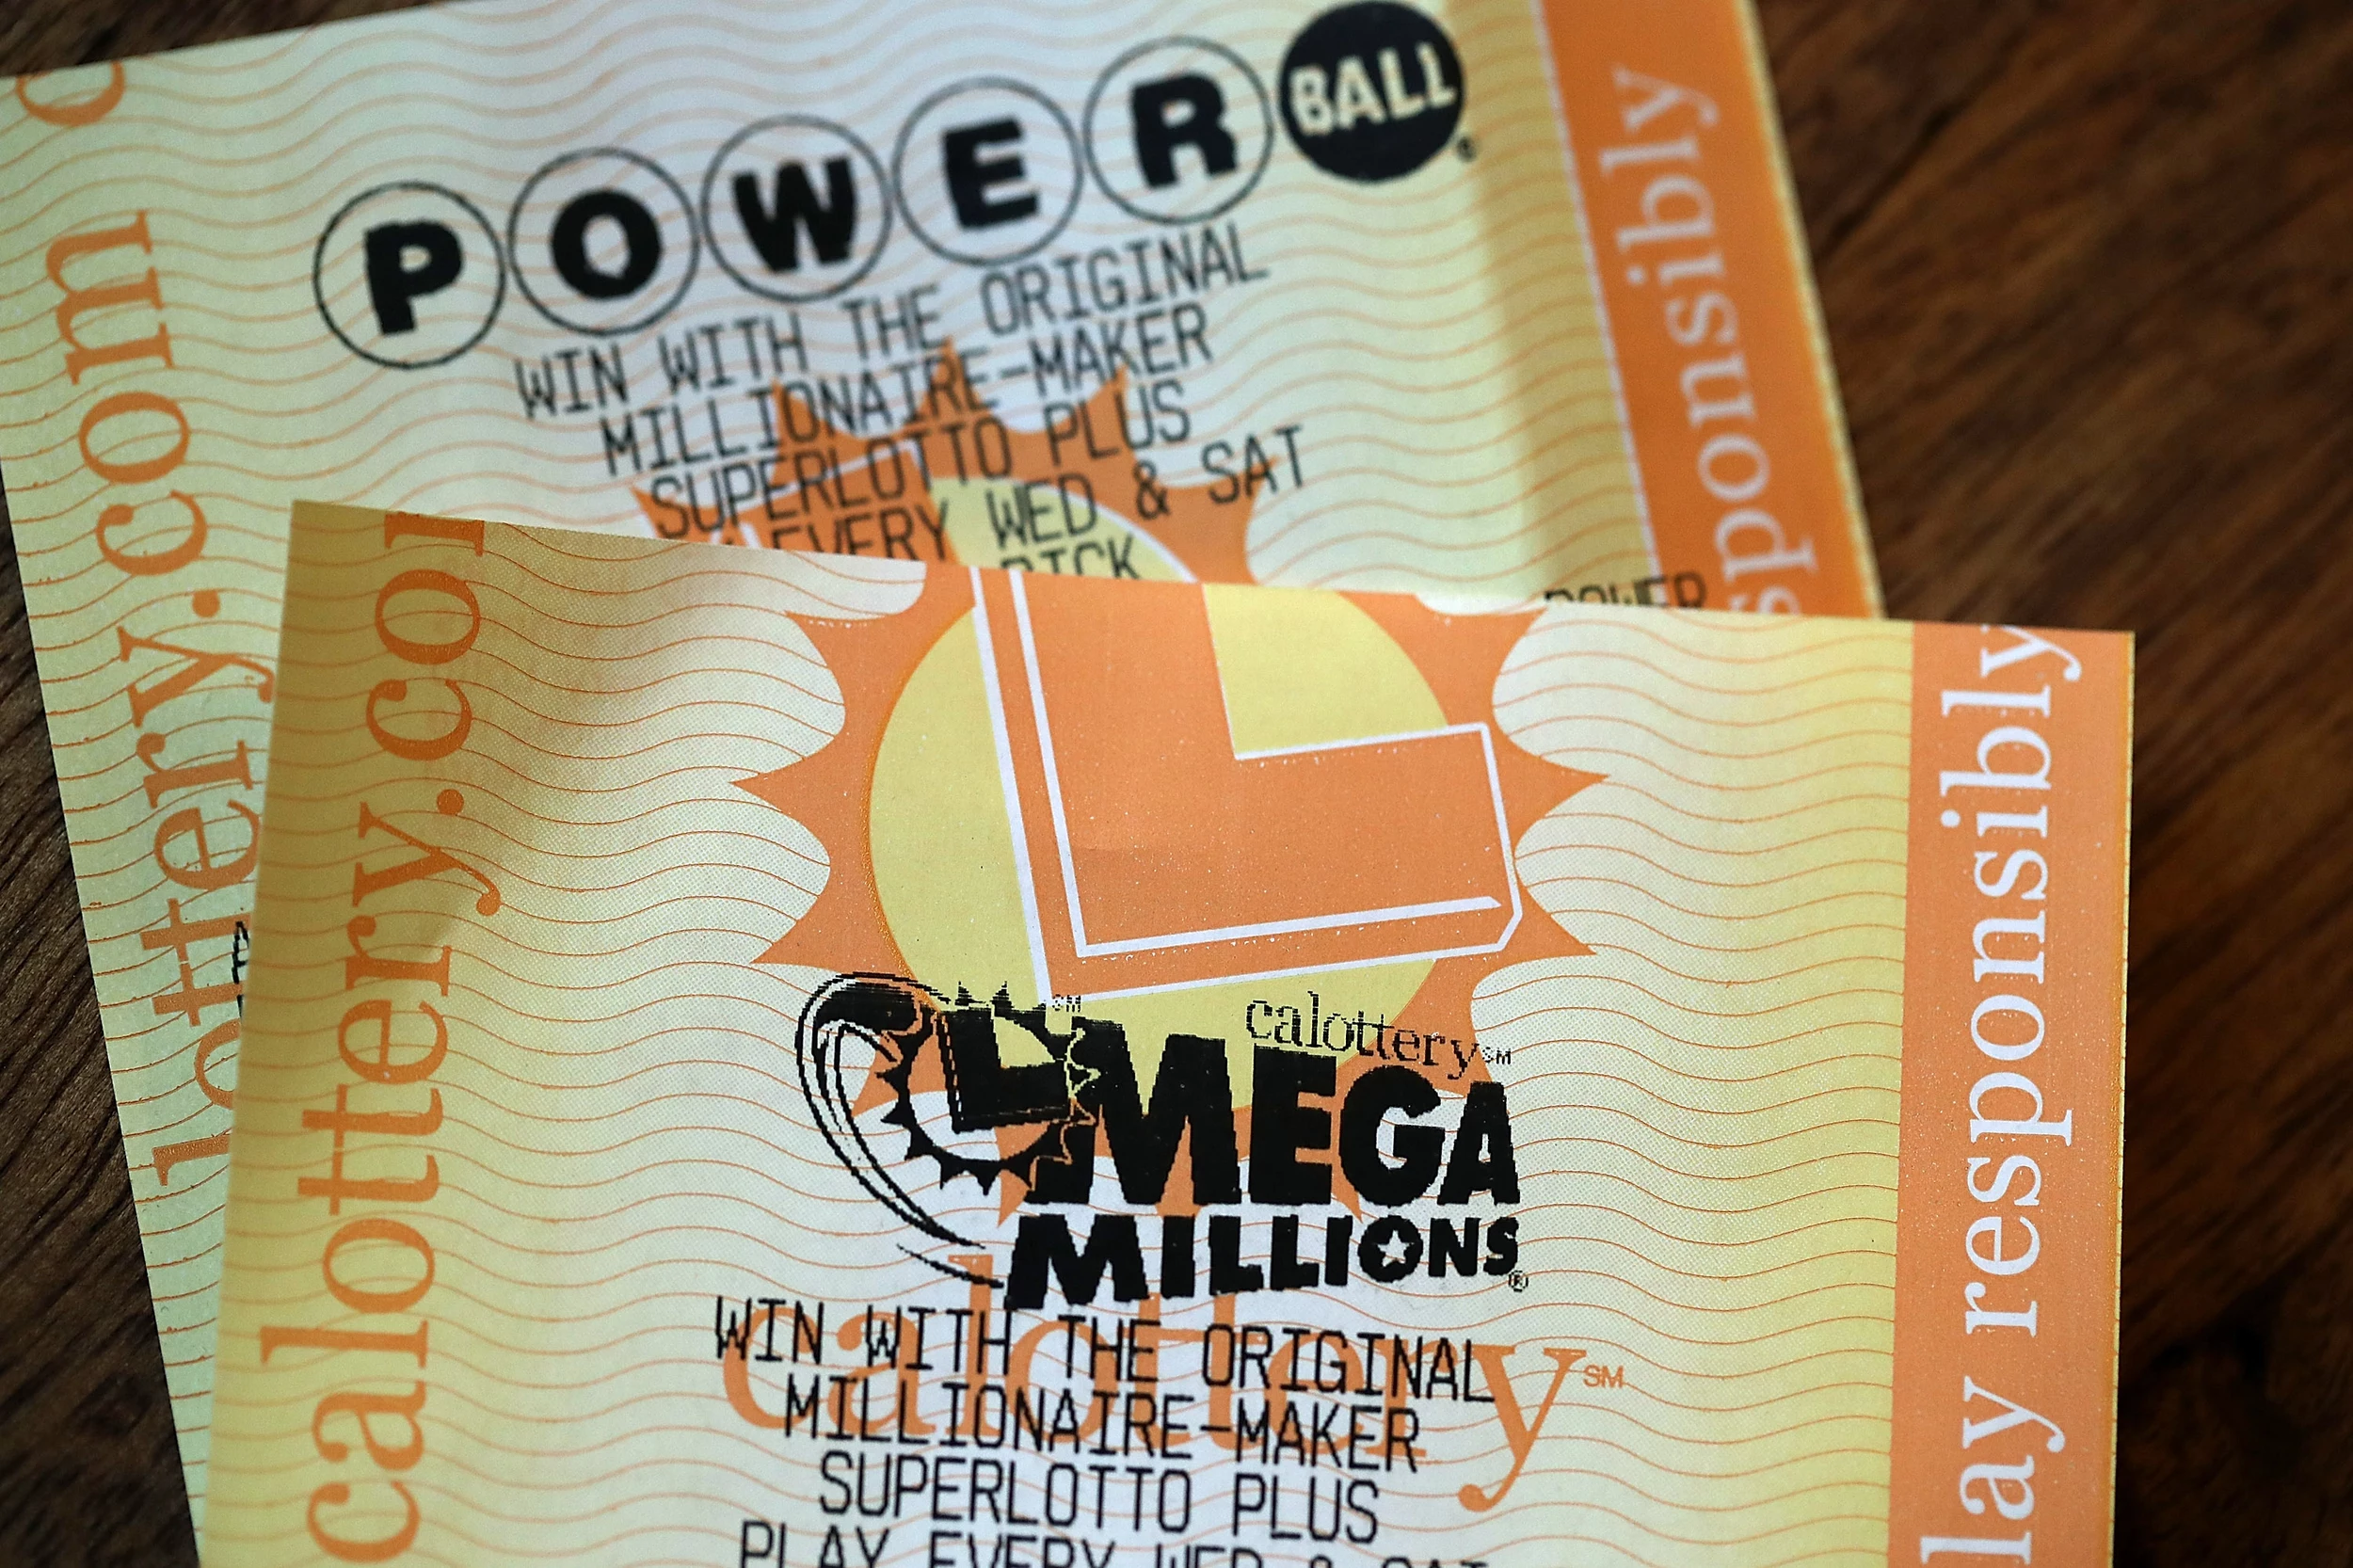 buy online mega millions lottery ticket